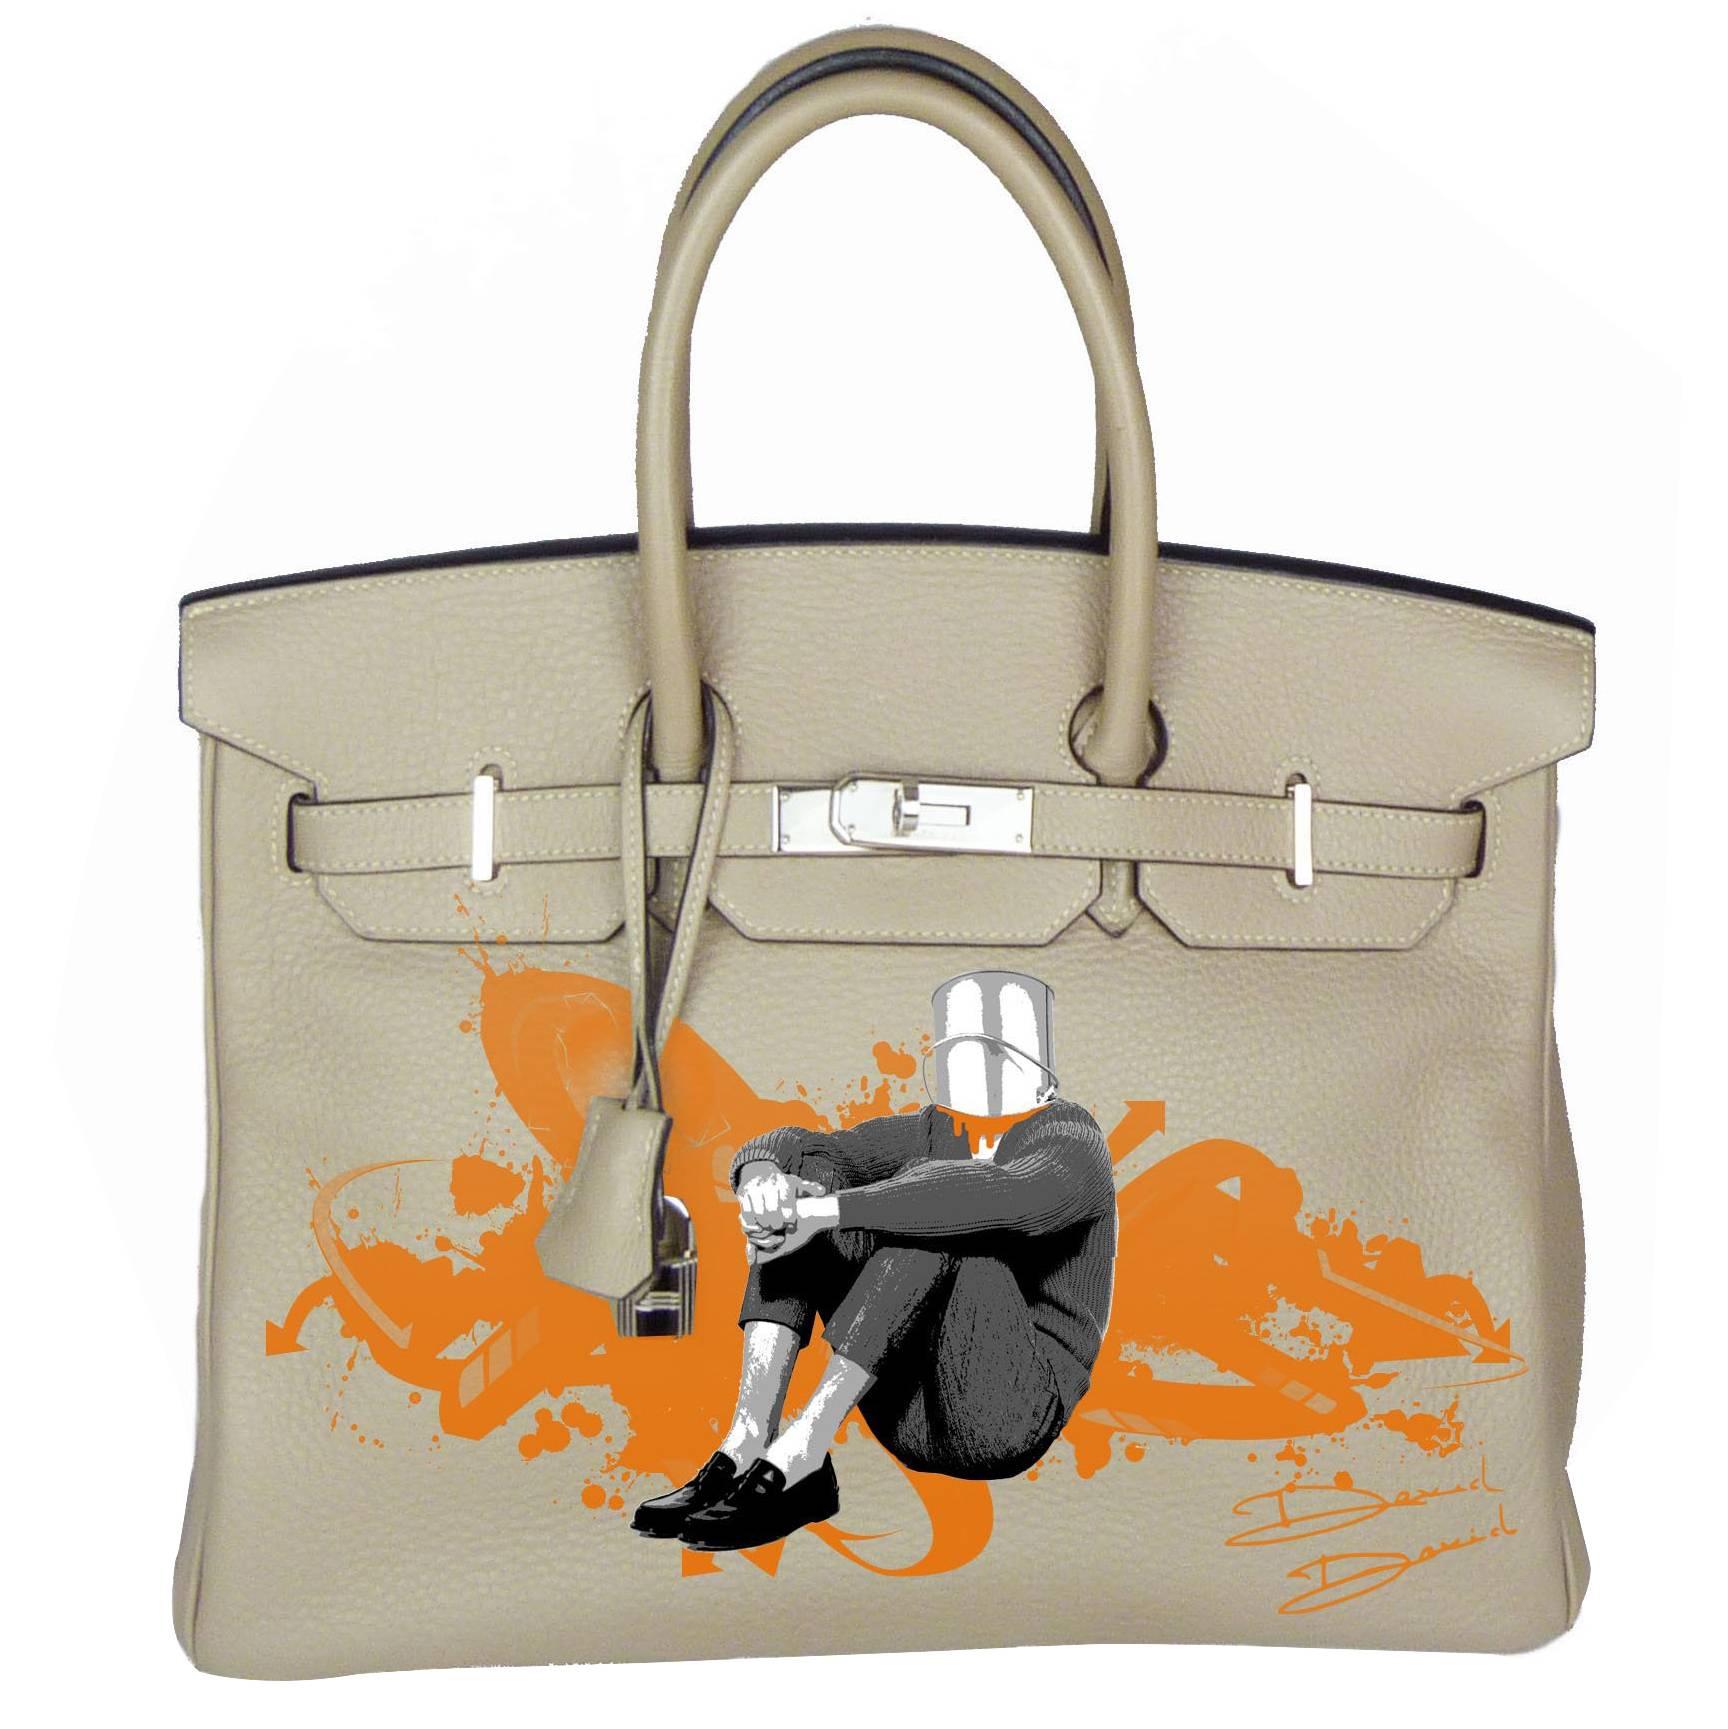 Customized Birkin 35 bag by the french artist David David For Sale